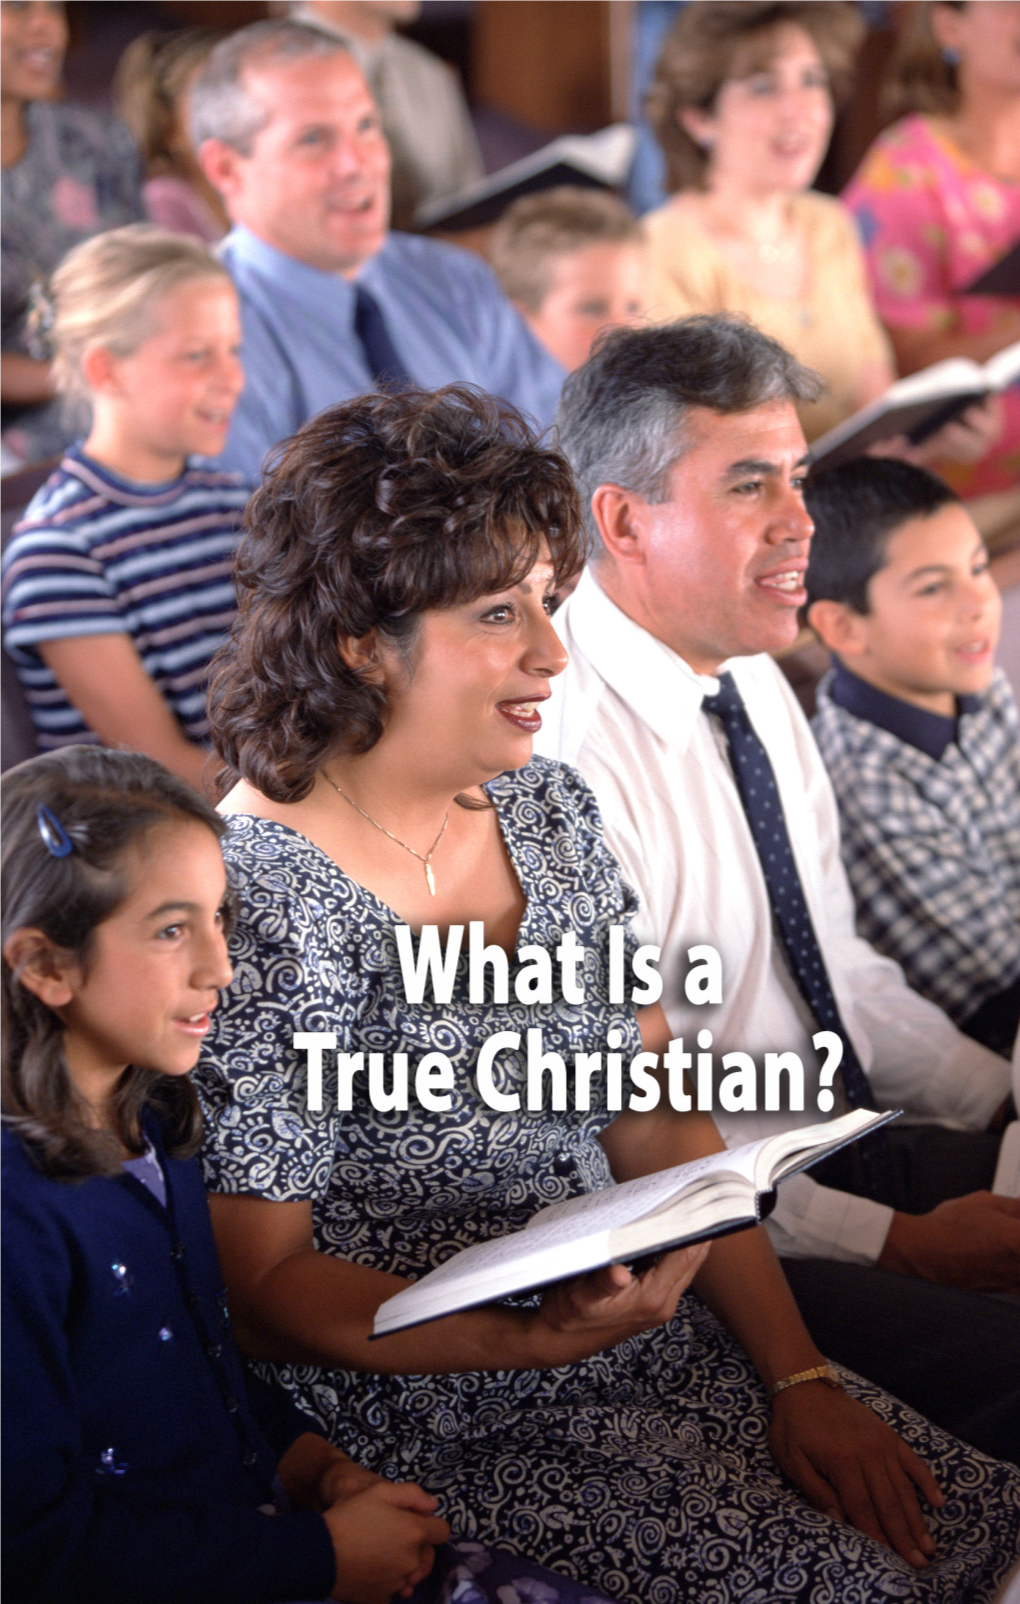 True Christian? by Roderick C